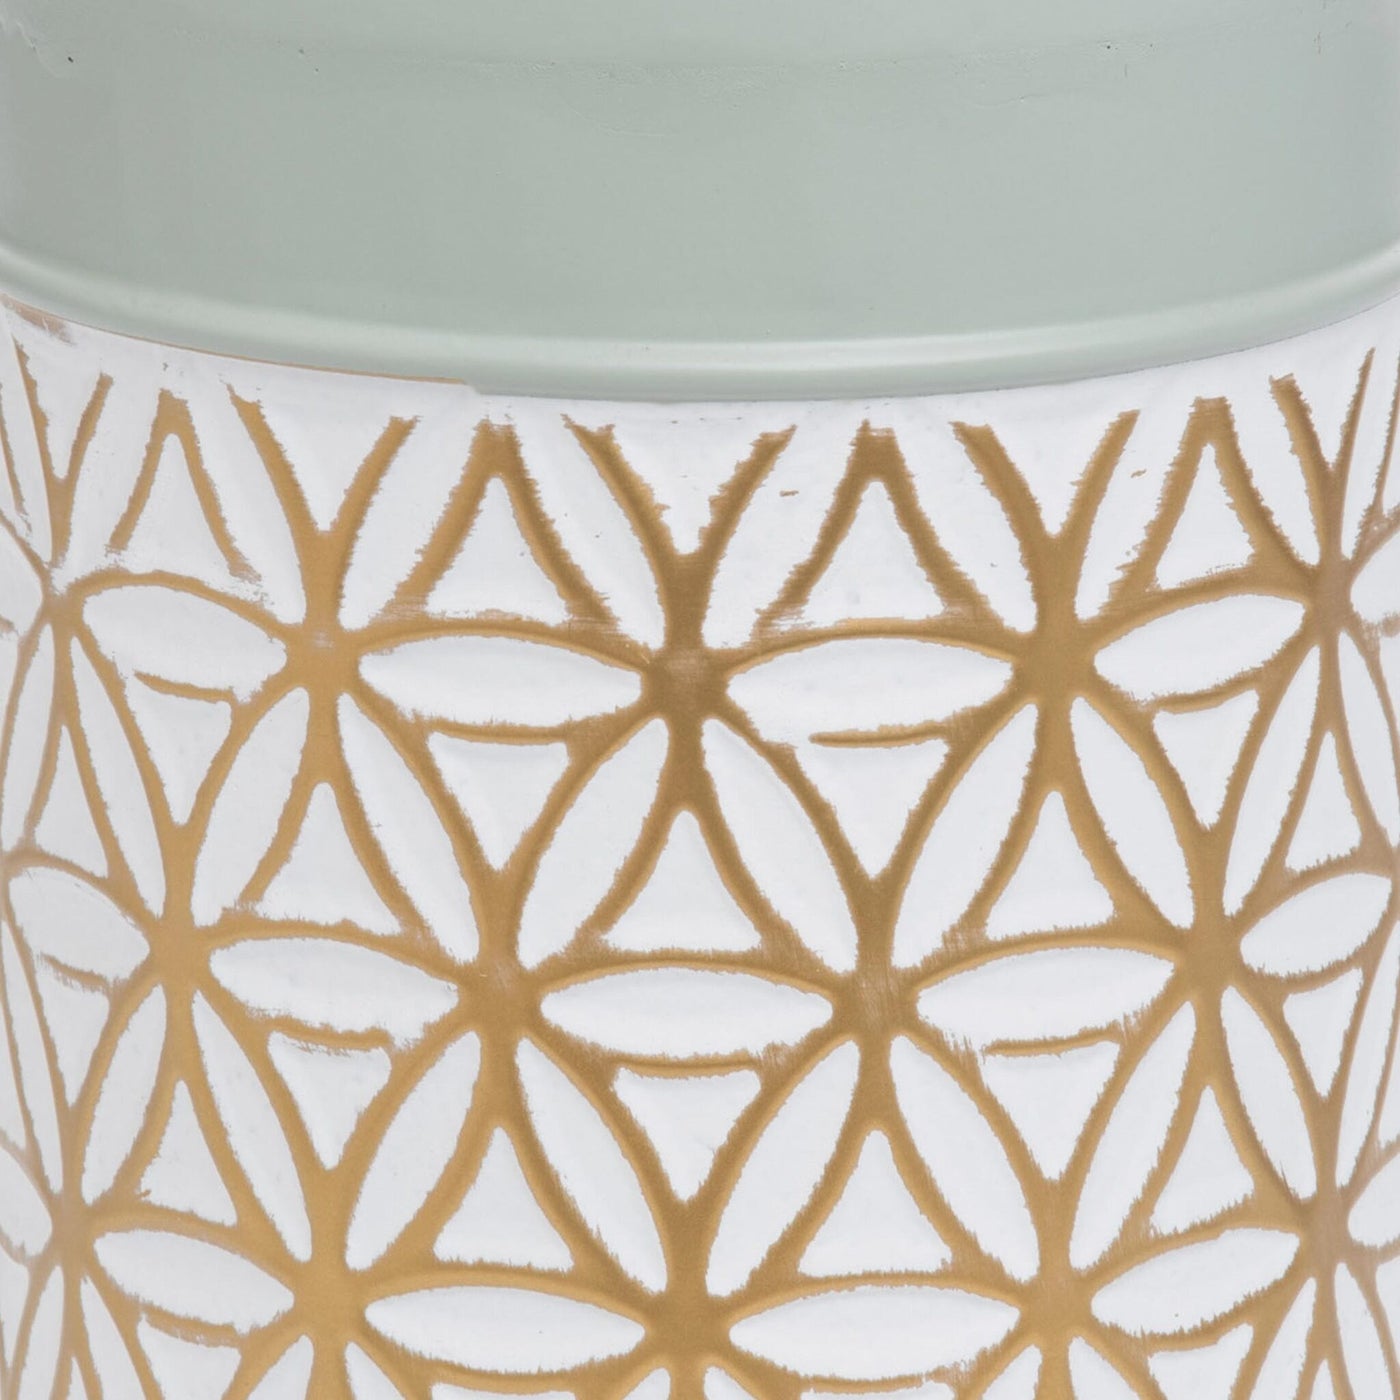 Modern Brass Vase Green